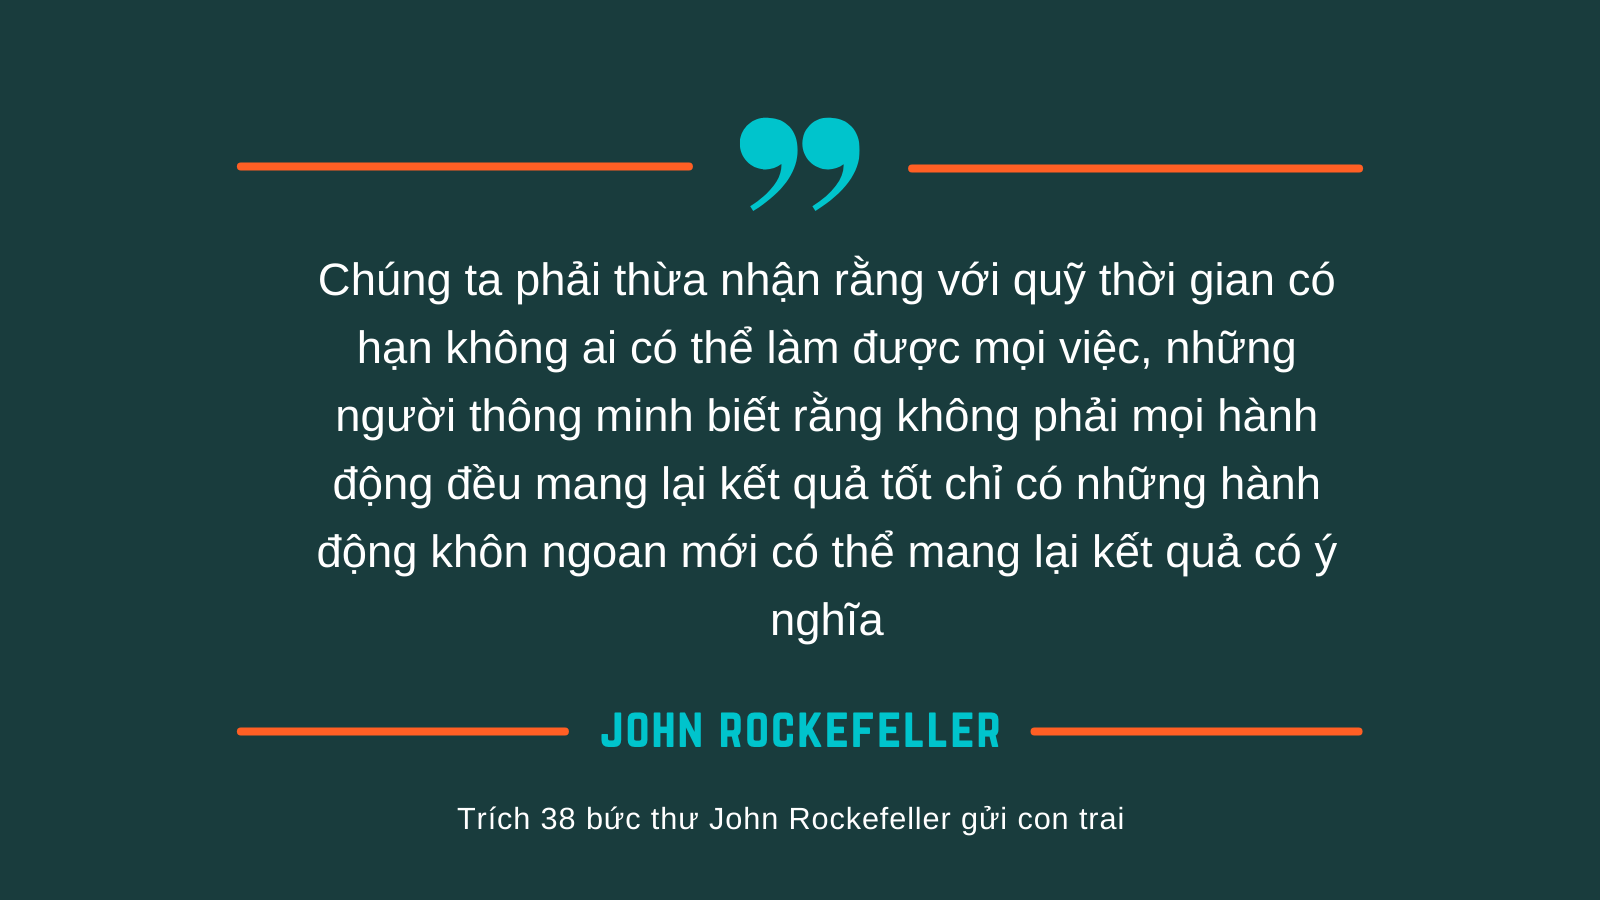 38 buc thu John Rockefeller gui con trai